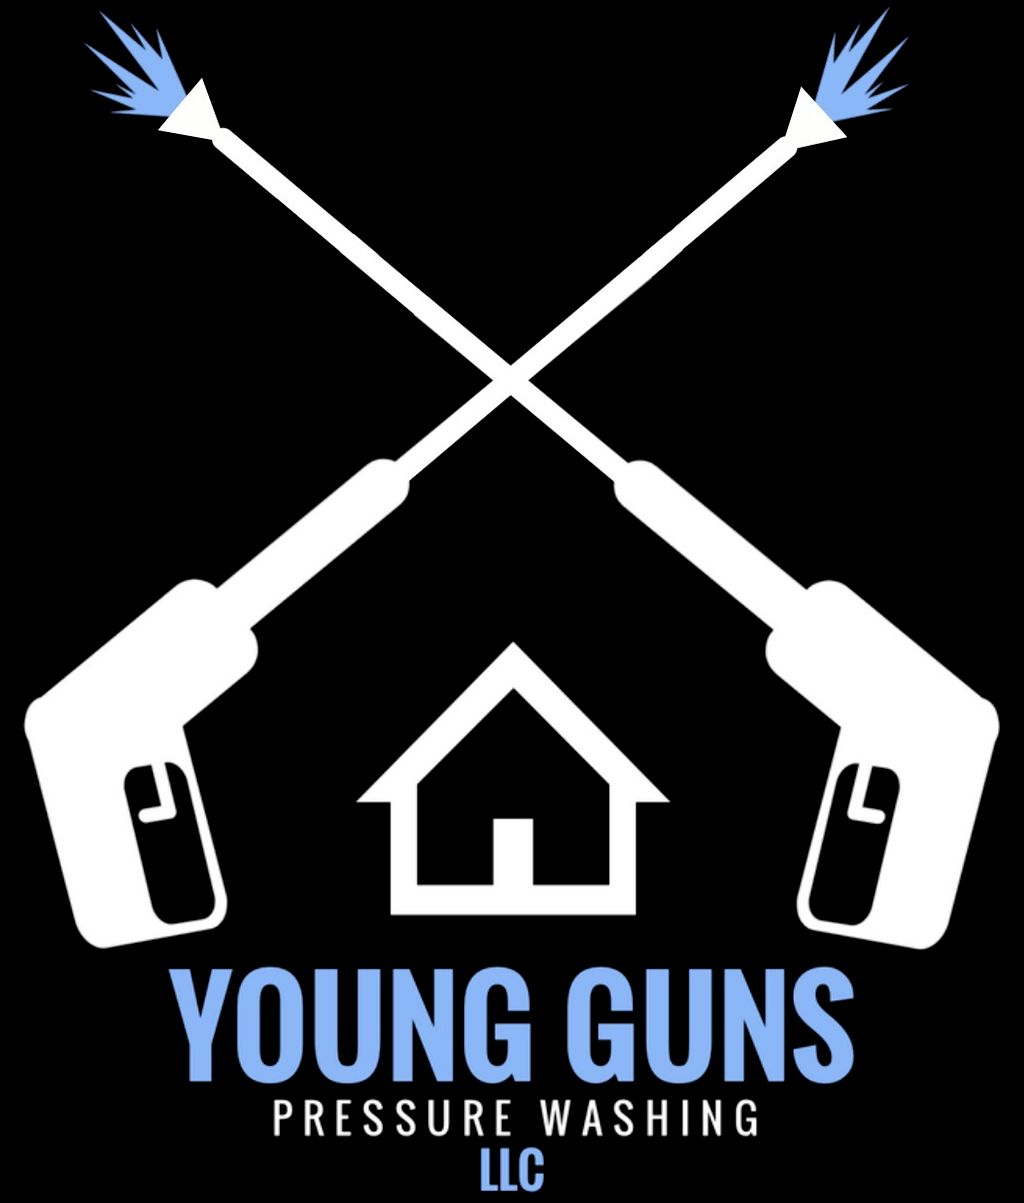 Young guns pressure washing LLC